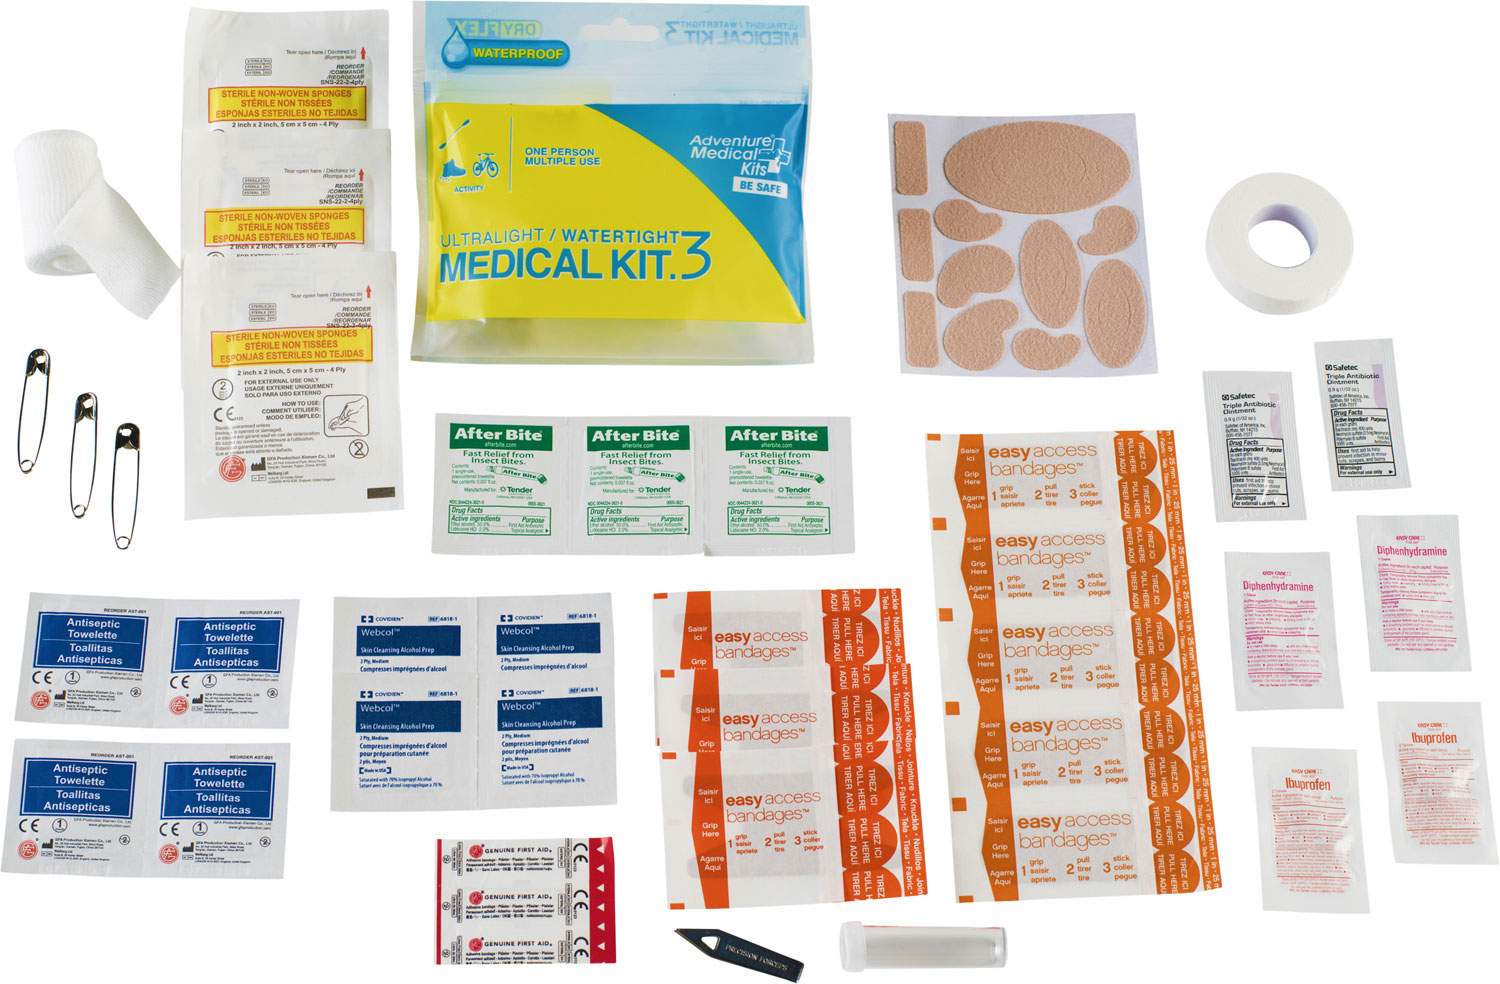 Adventure Medical Kits 01250297 Ultralight / Watertight #3 Medical Kit Treats Injuries/Illnesses Waterproof White